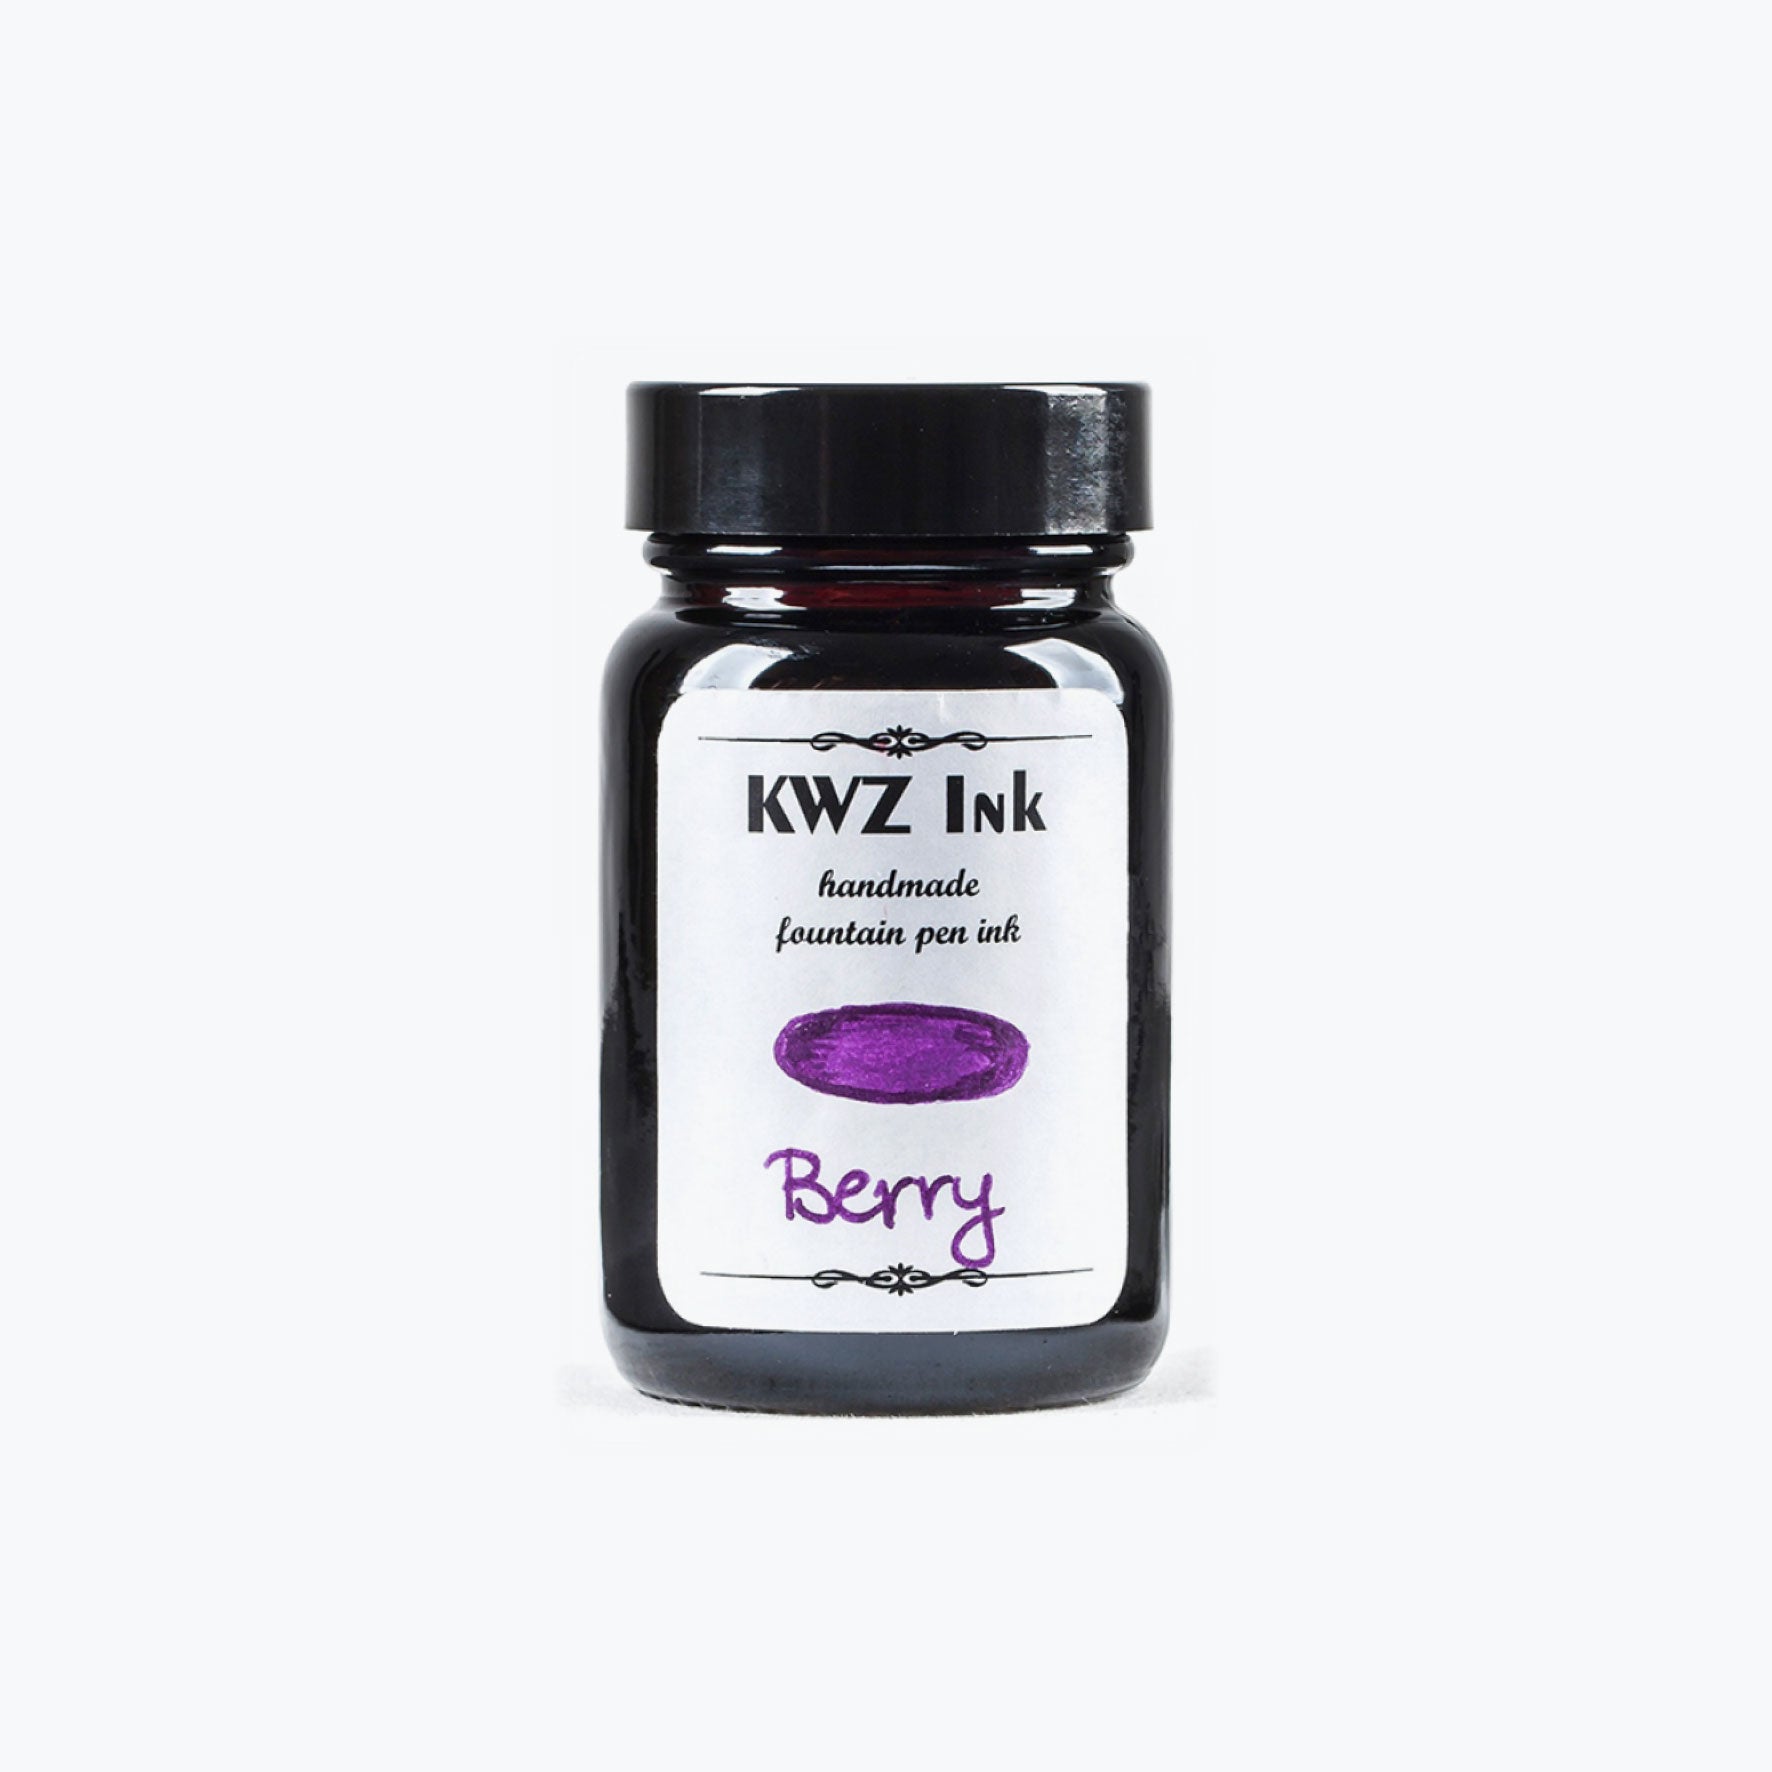 KWZ Berry fountain pen ink